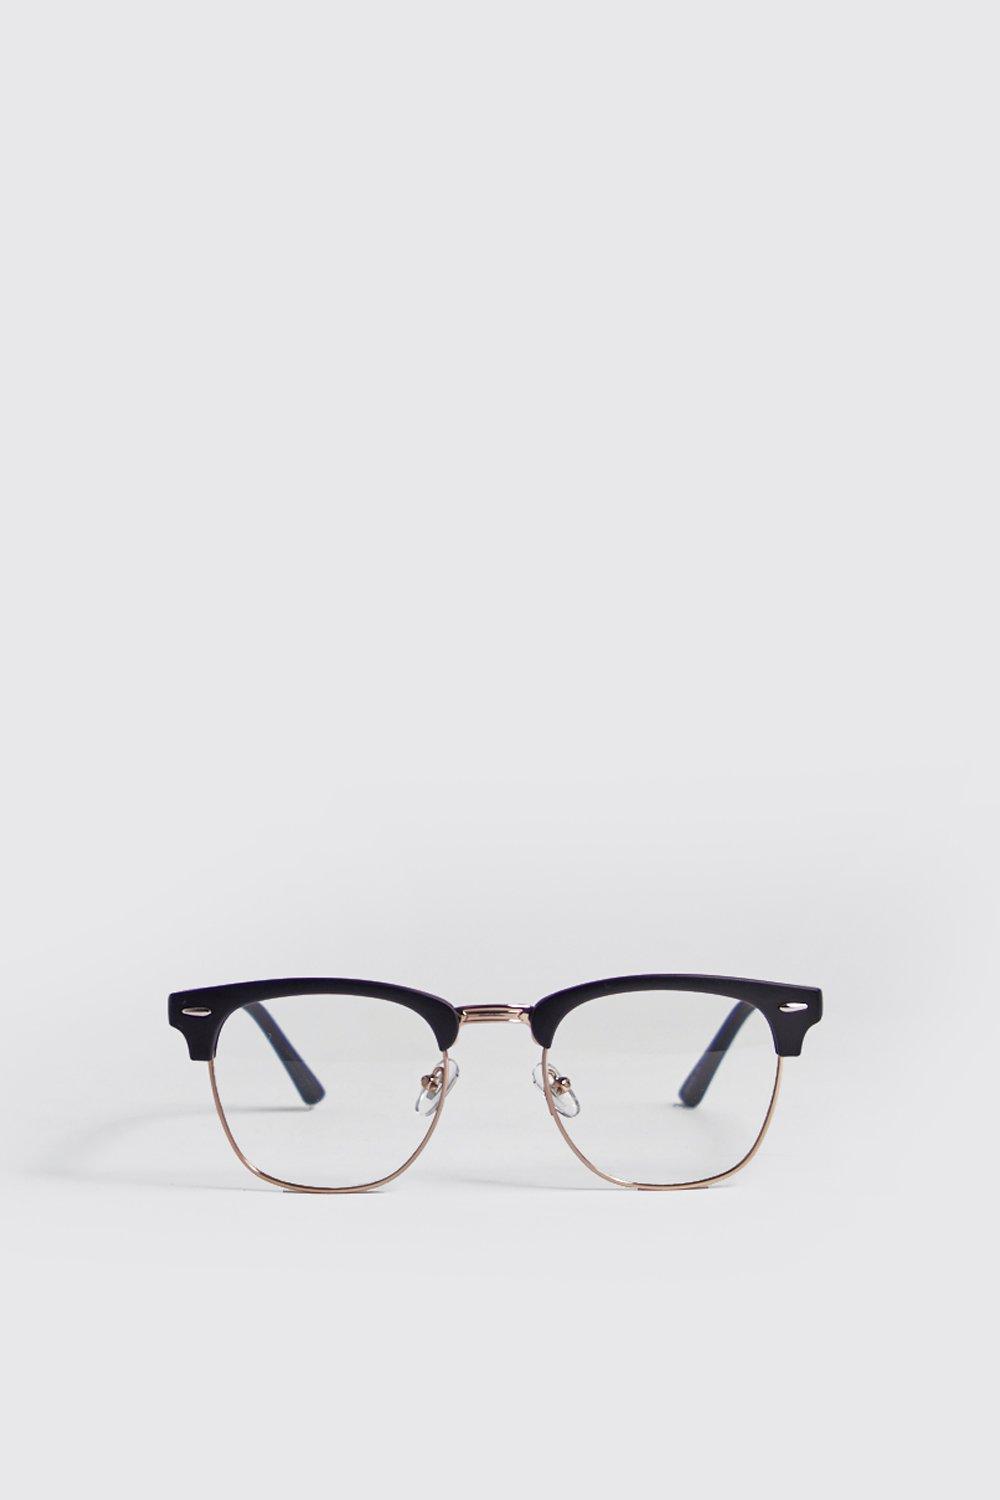 clear lens fashion glasses